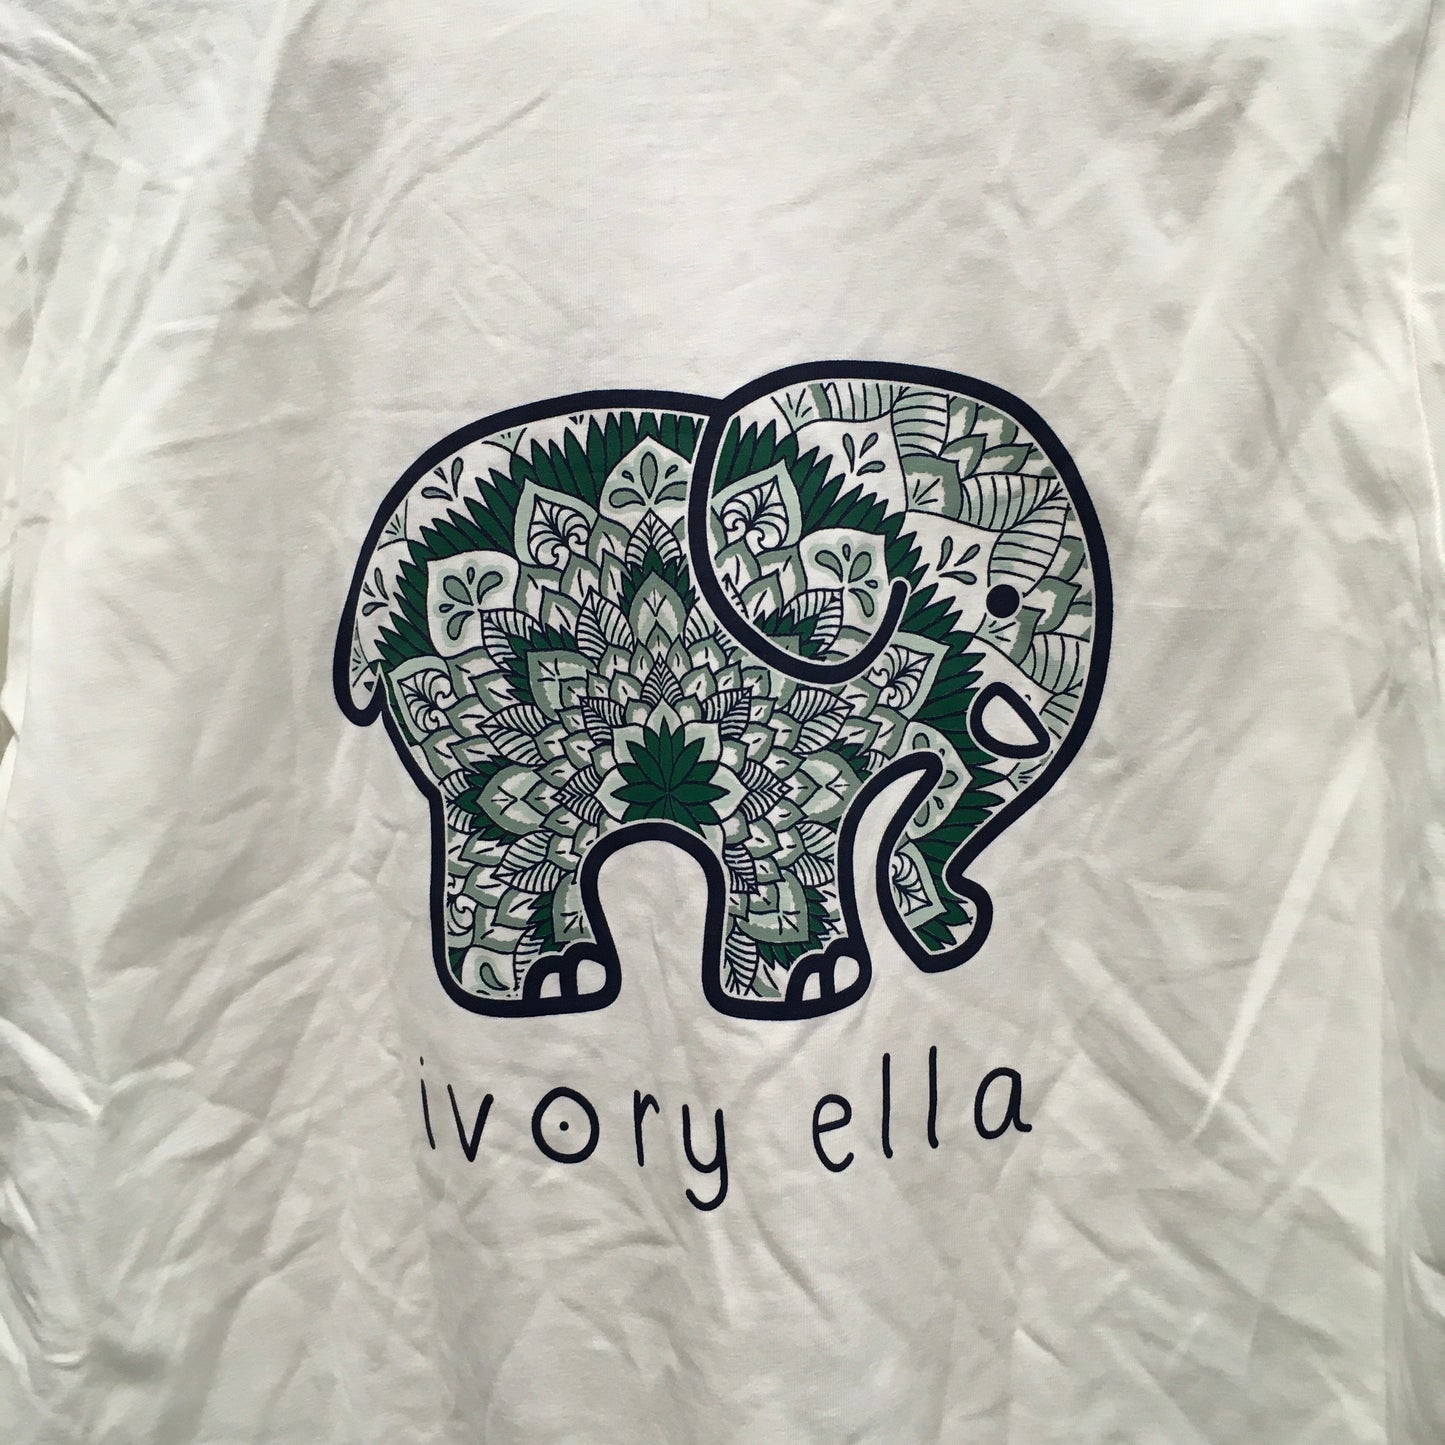 White Top Short Sleeve Ivory Ella, Size L